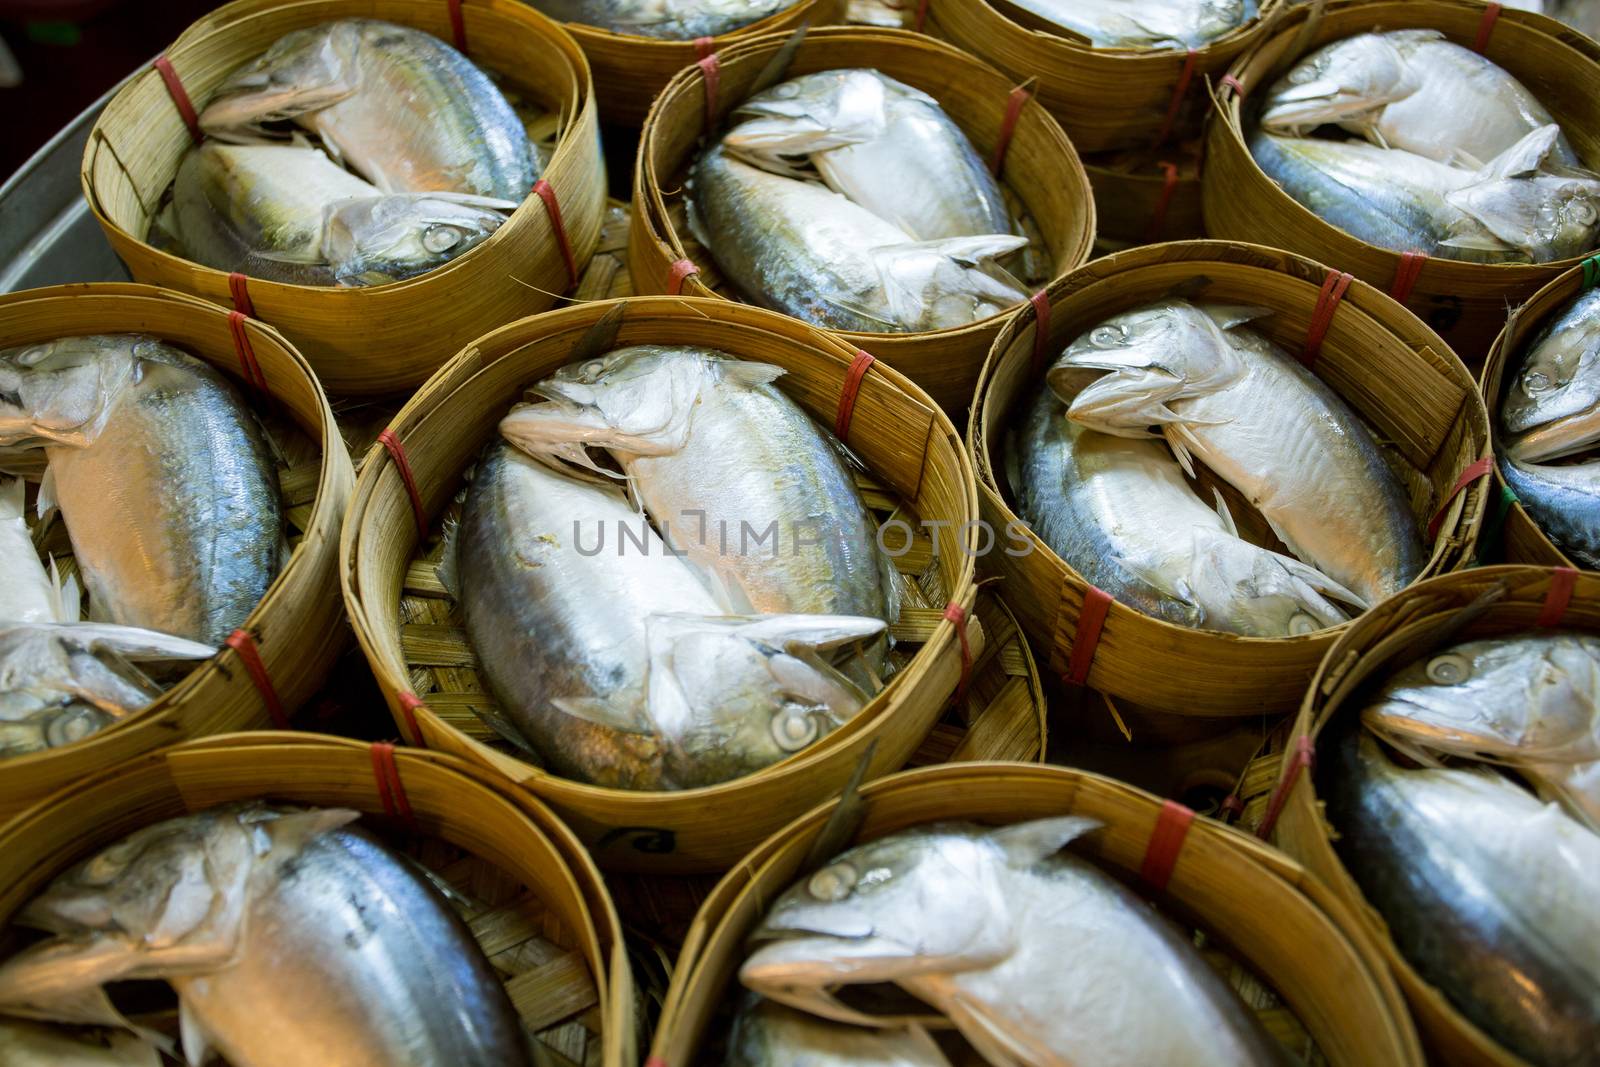 Baskets of mackerel fish in Thai street markets by antpkr